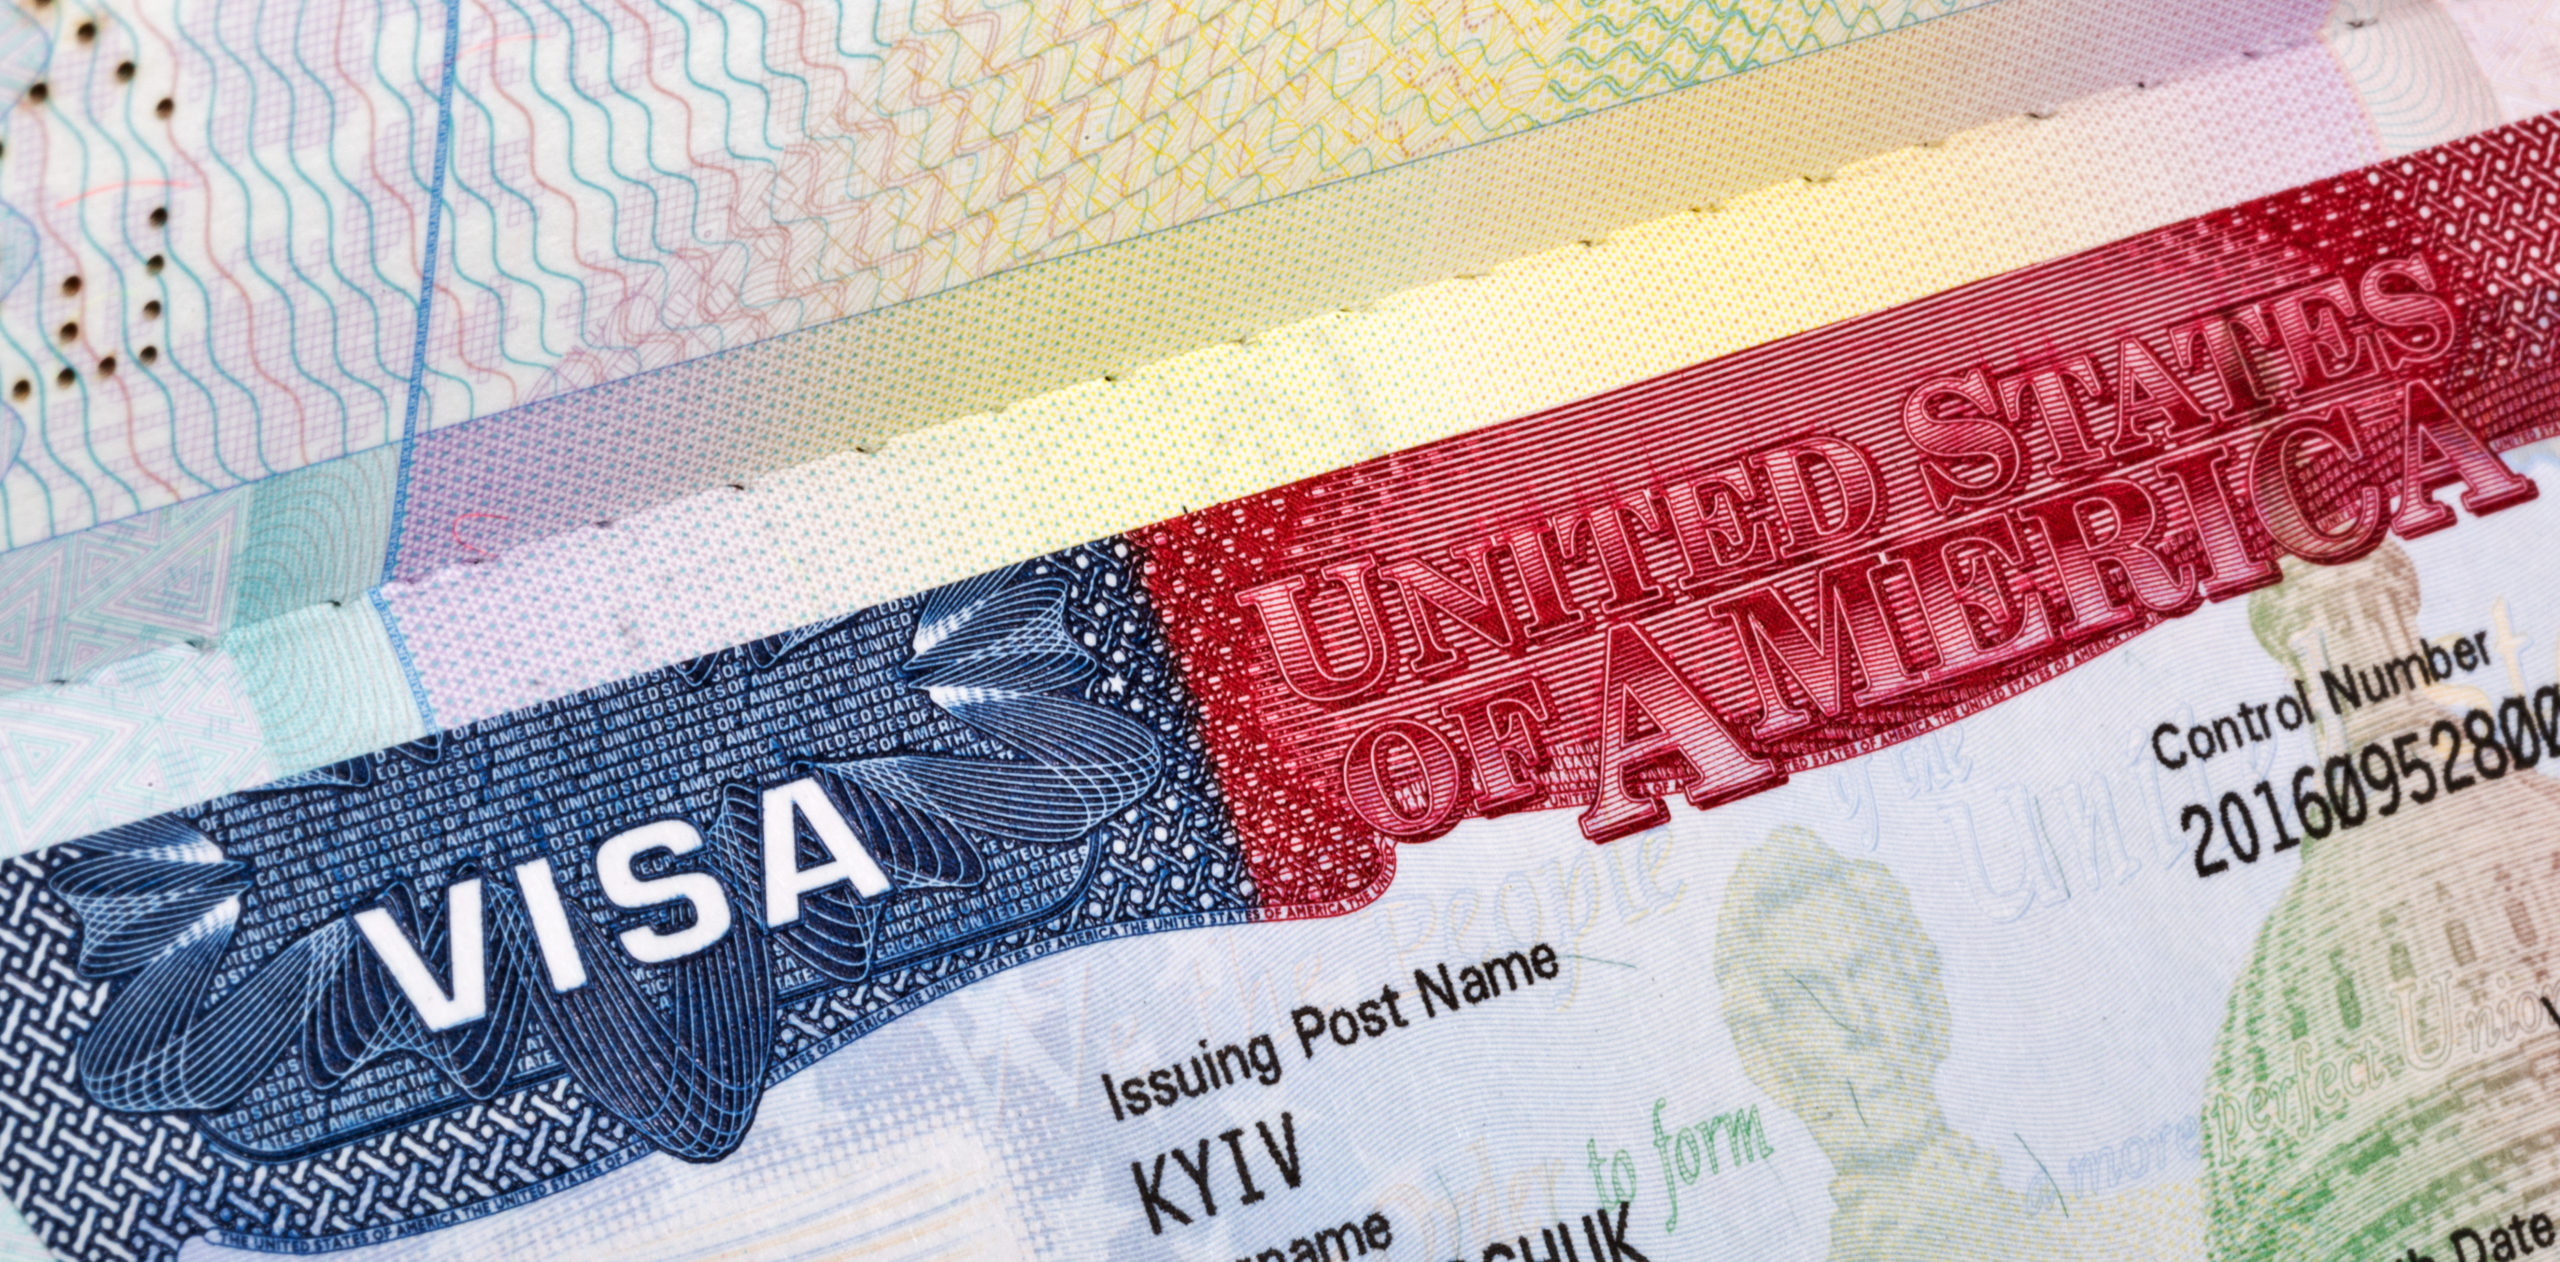 American Visa in the passport closeup issued in Kiev, Ukraine